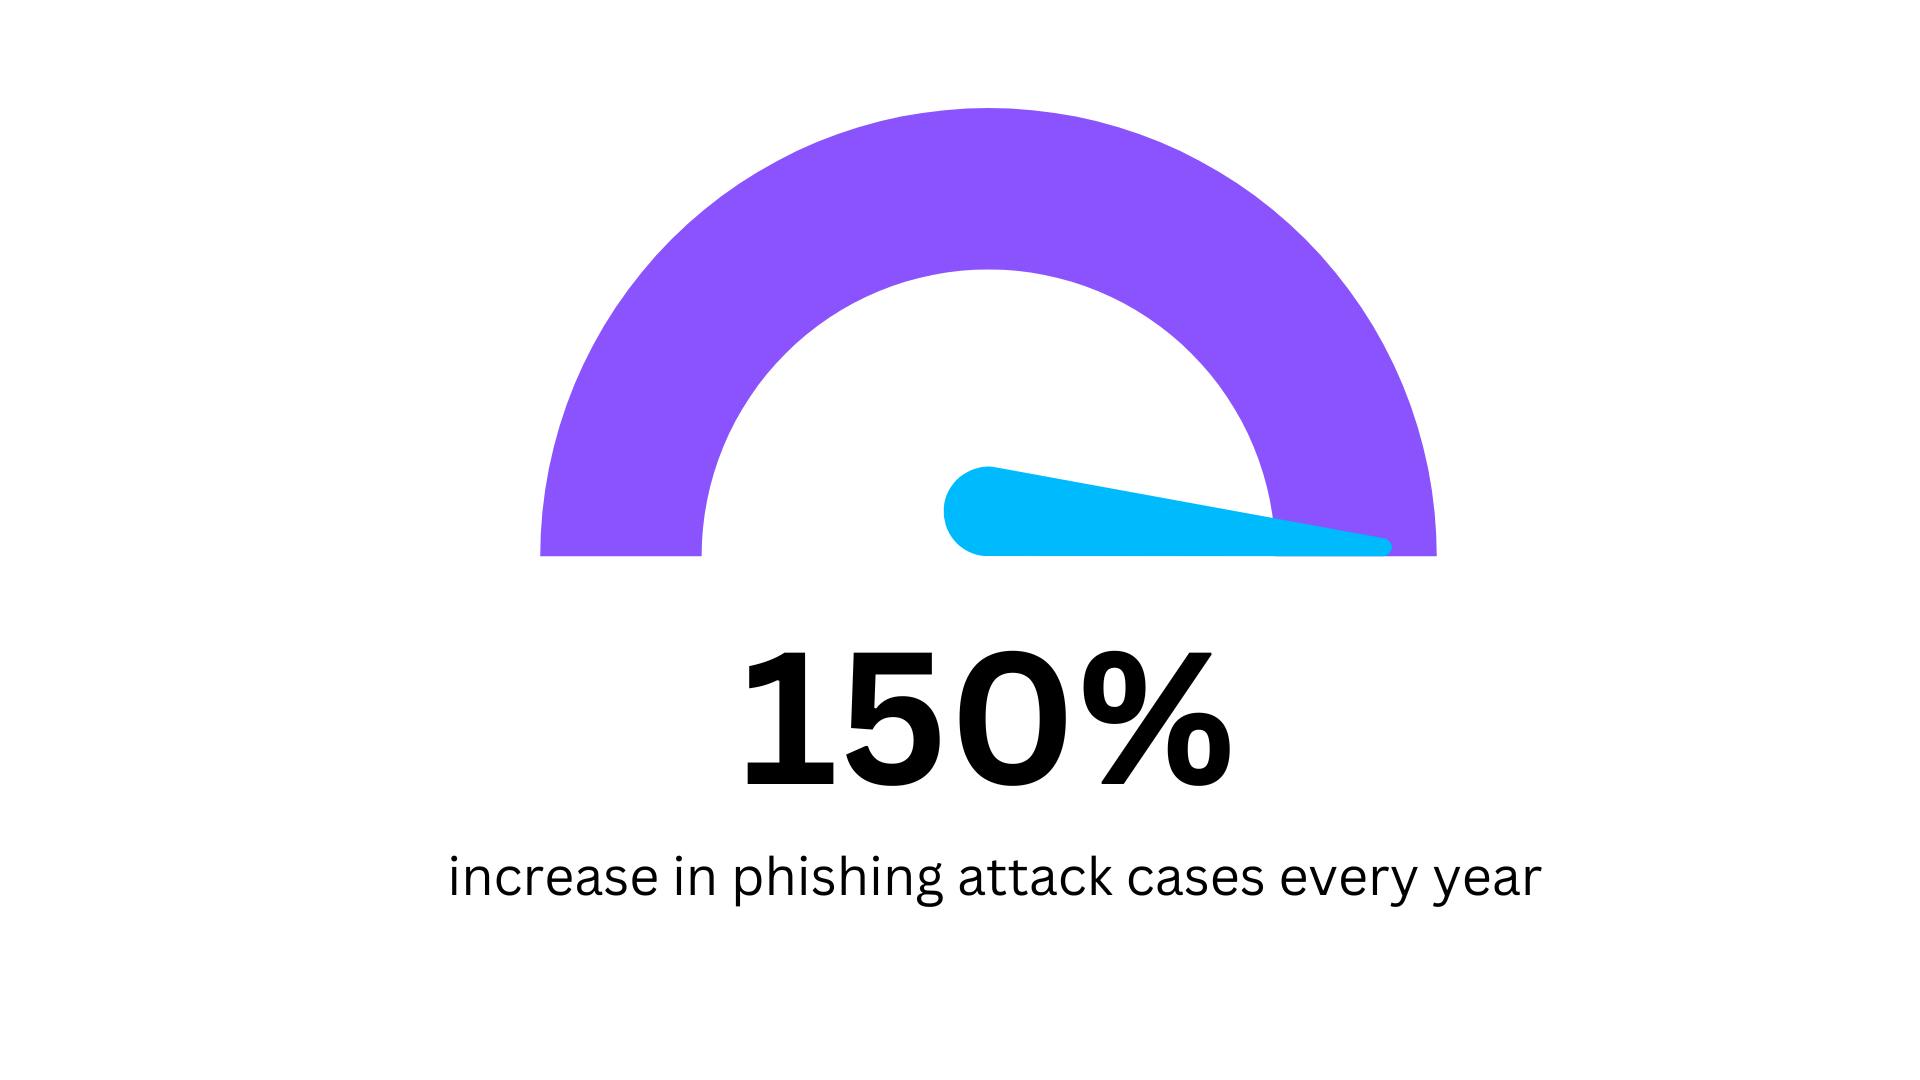 Cybersecurity Statistics - The upward treand in phishing attacks